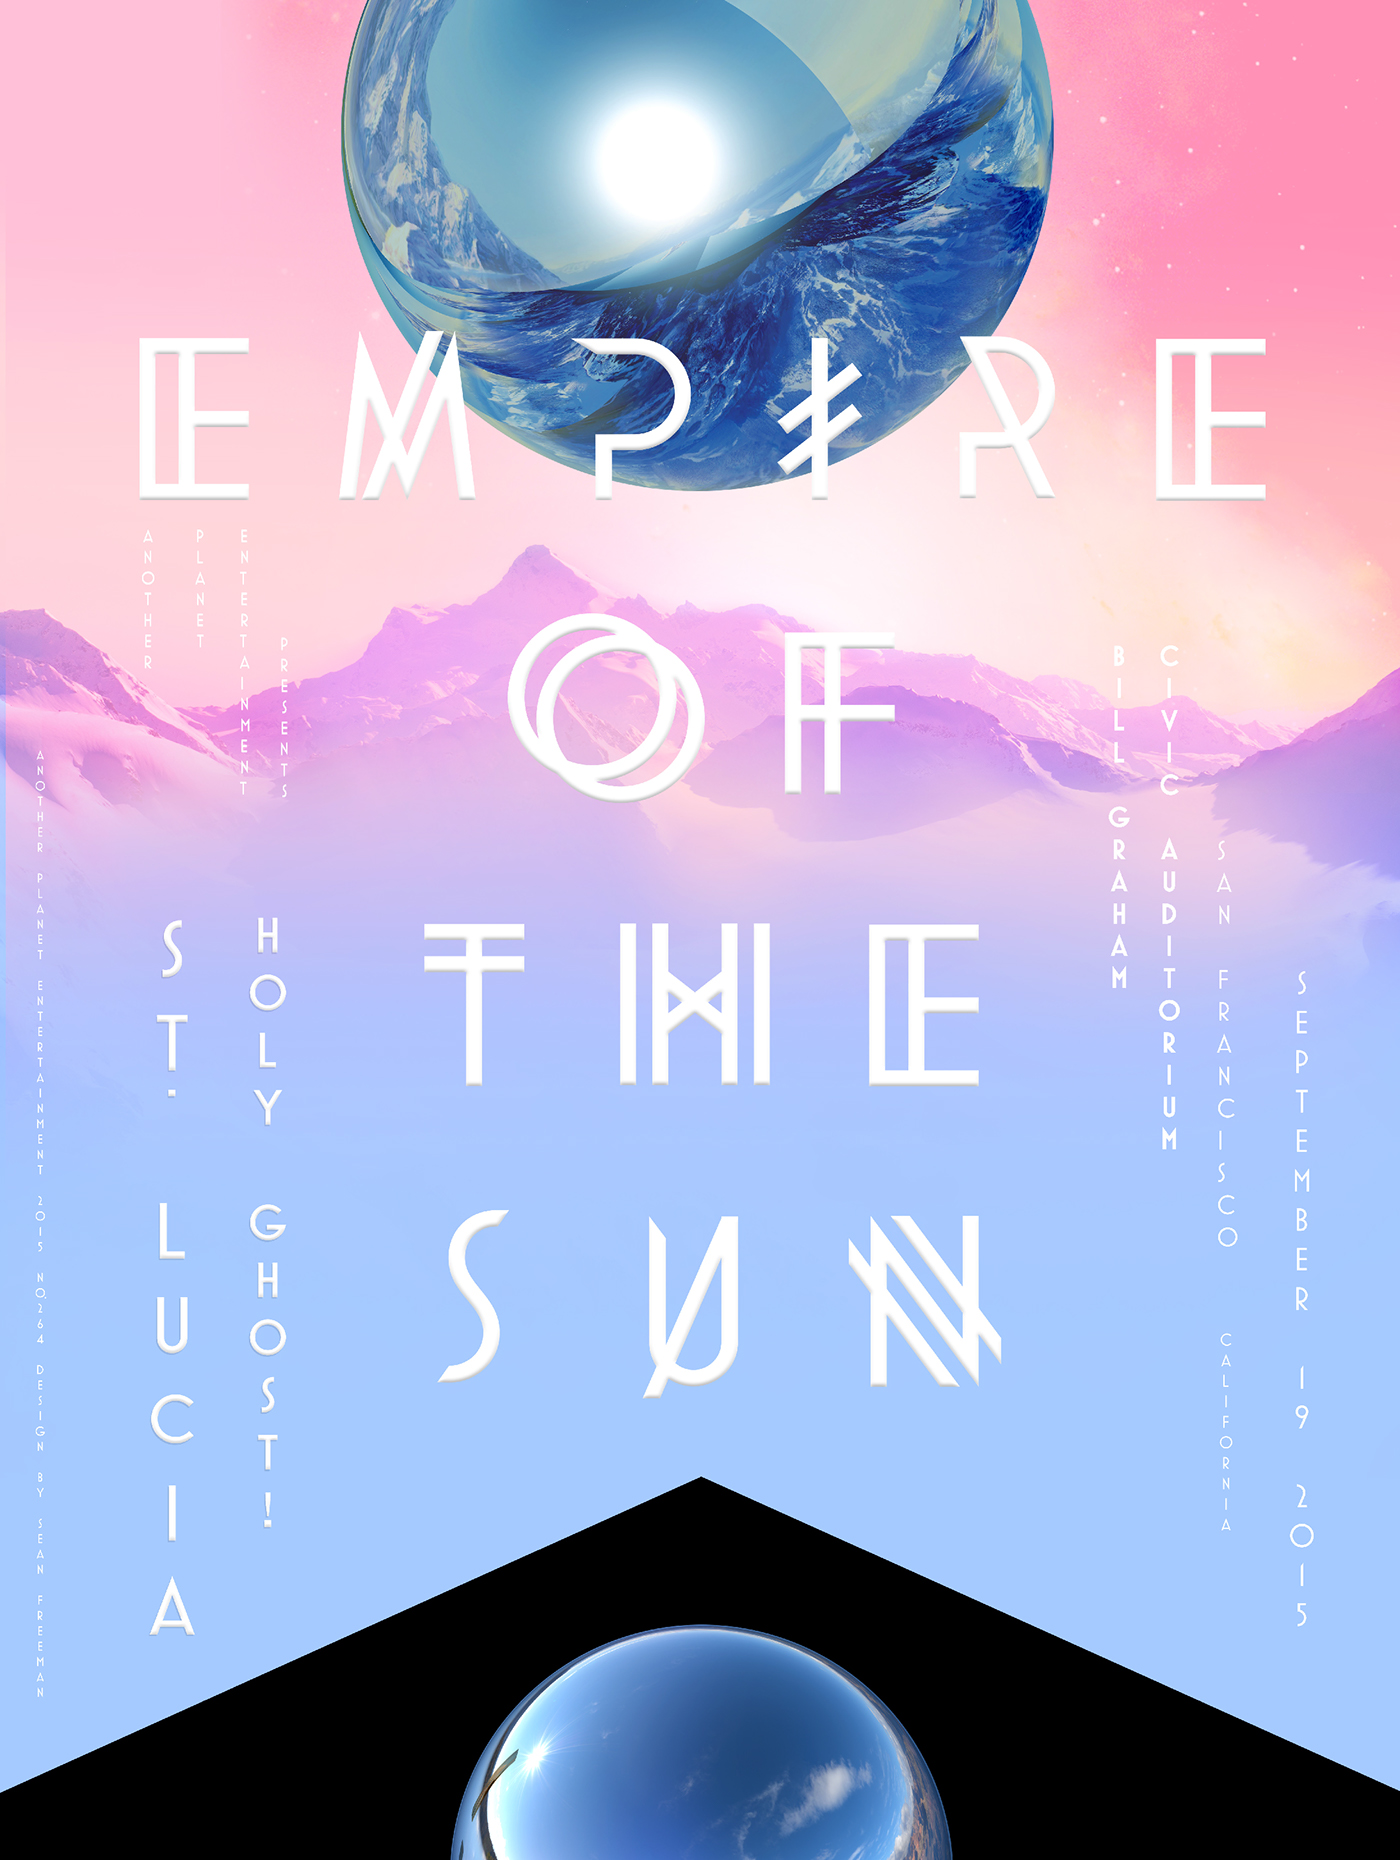 poster music band Landscape creative lettering mix-media mystical symbols dreamy